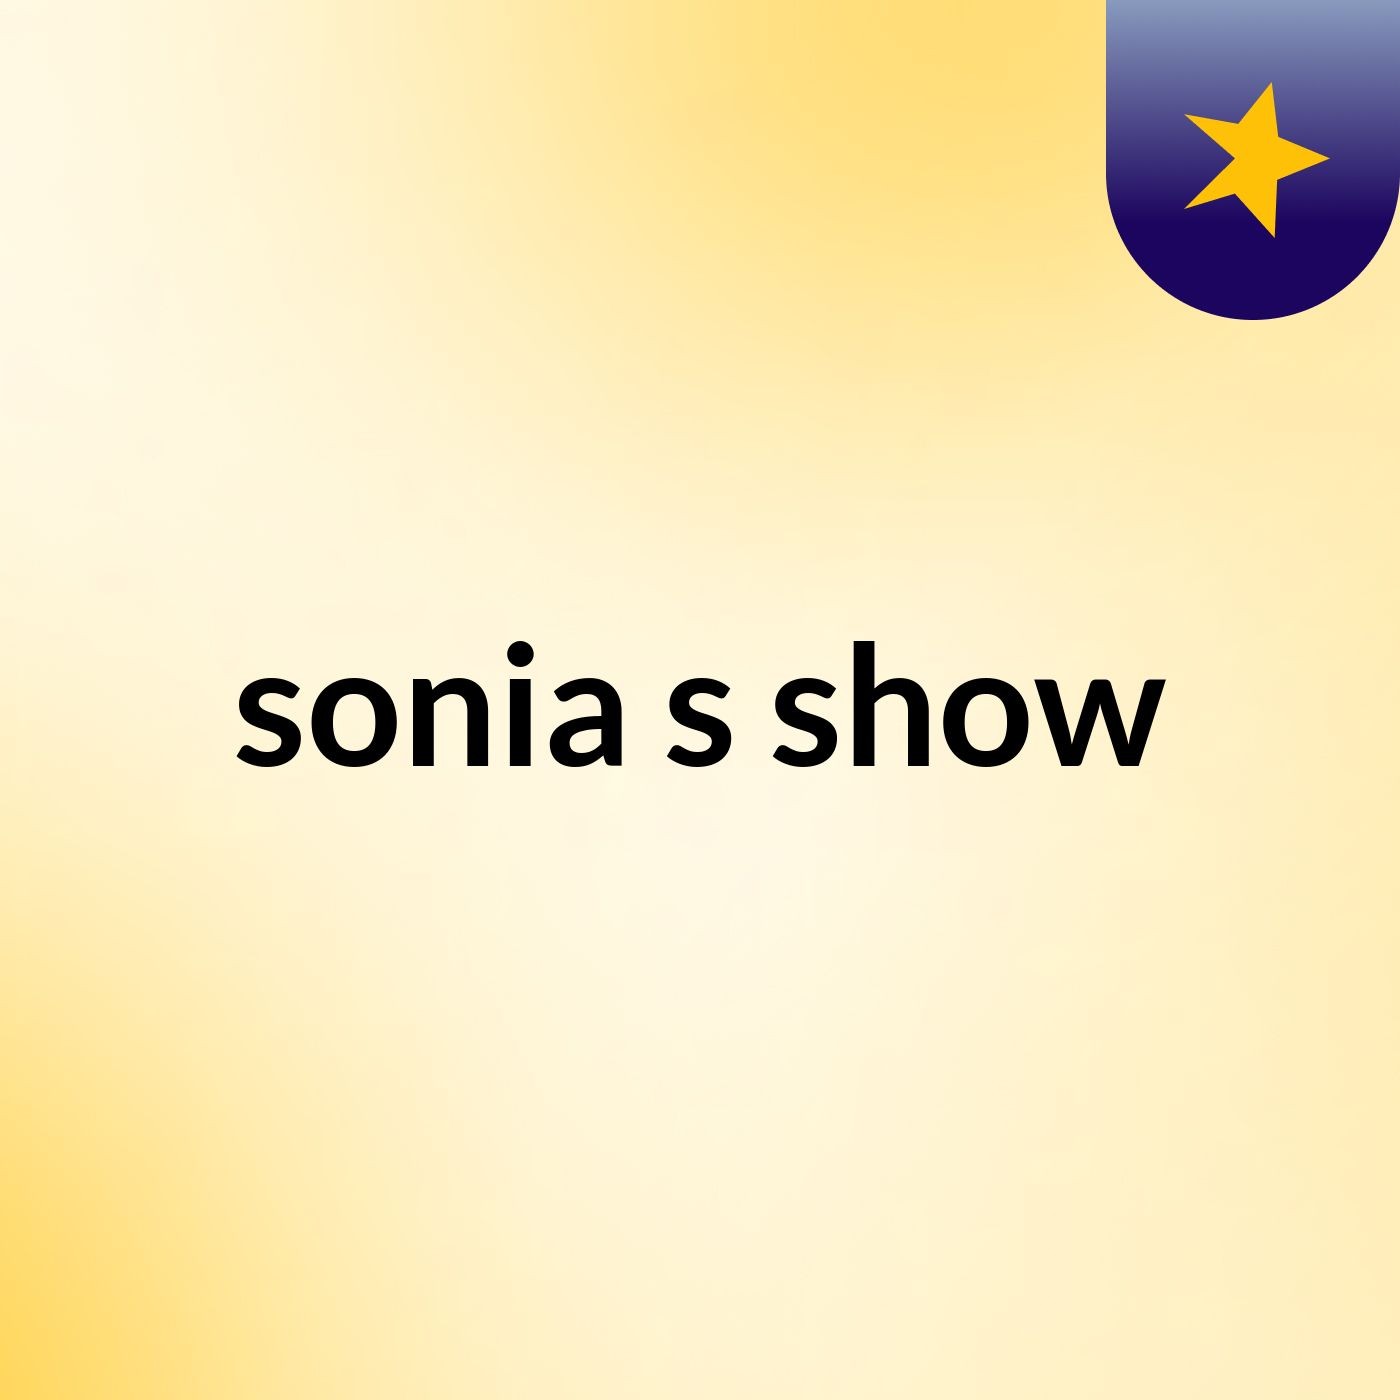 sonia's show